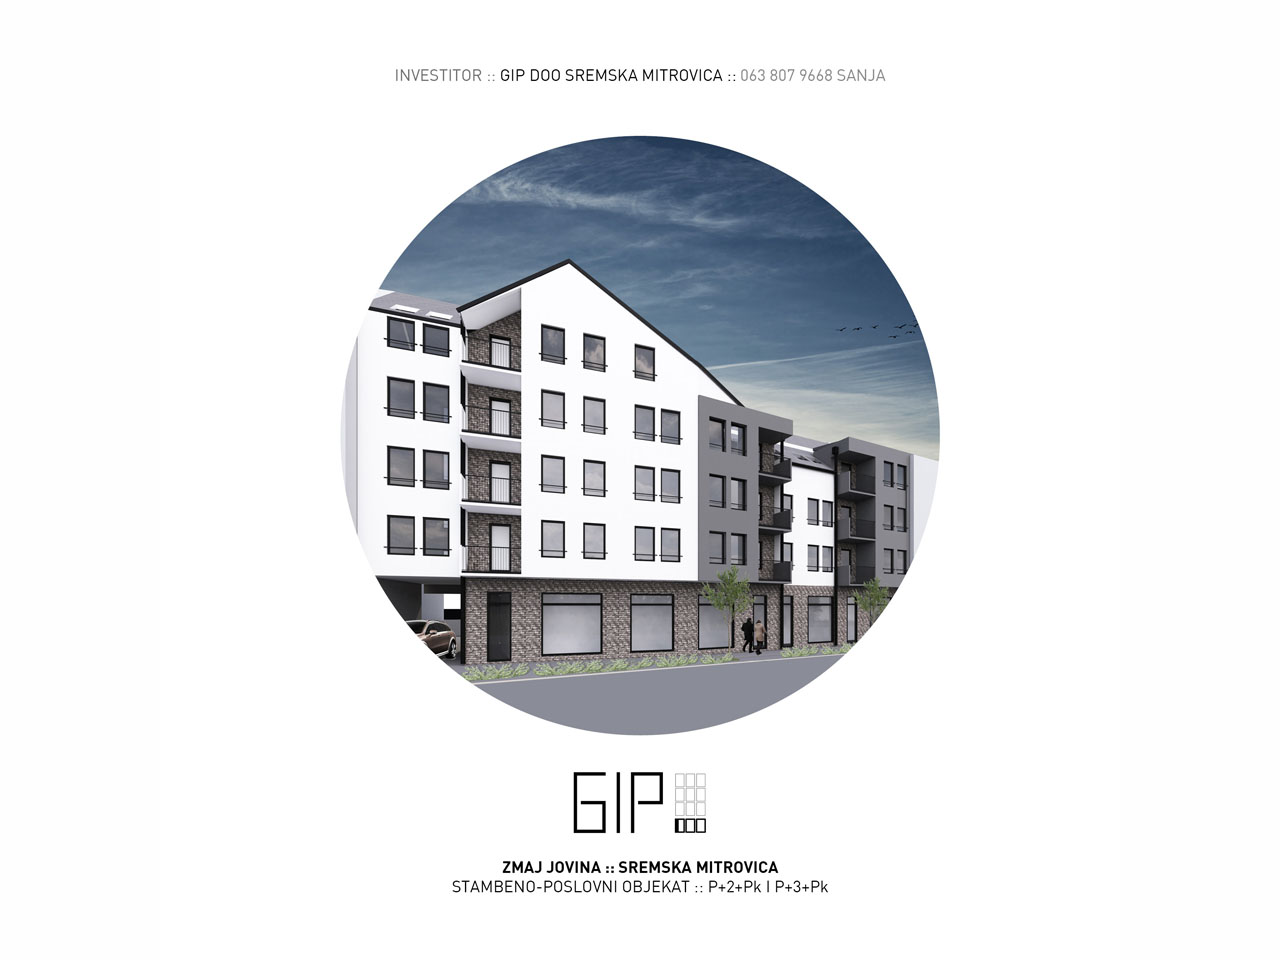 GIP DOO - GRAĐEVINSKI RADOVI Prodaja, izdavanje nekretnina Sremska Mitrovica - Slika 7